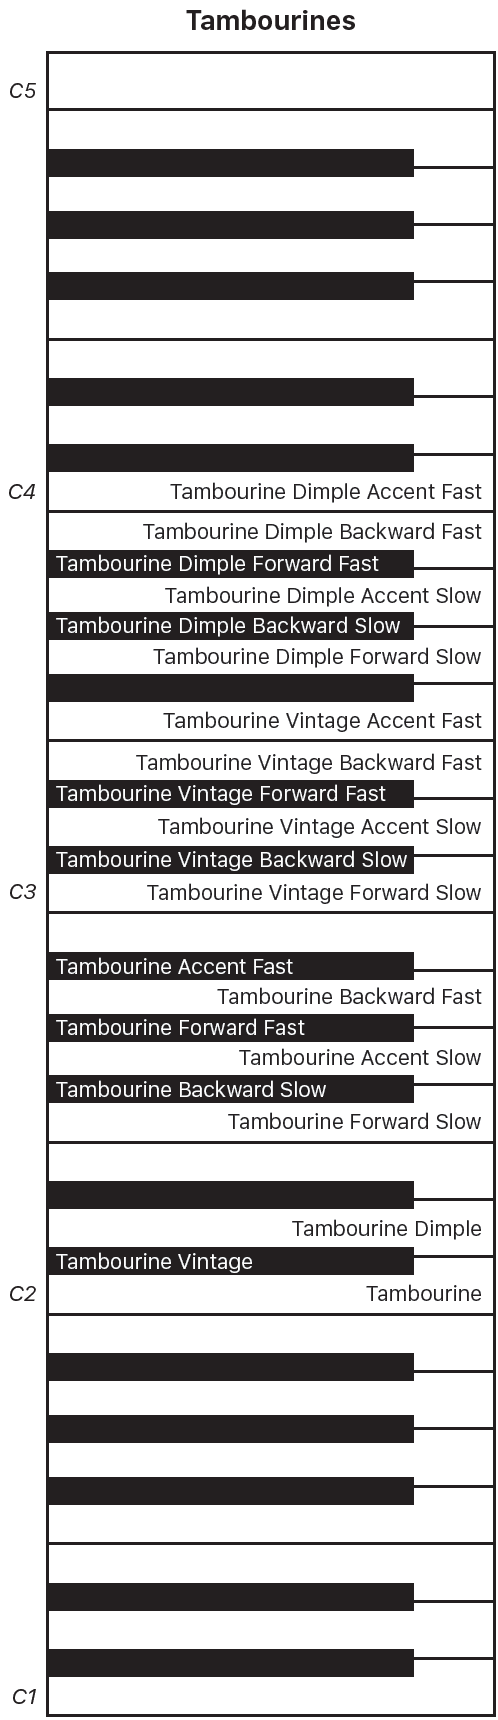 Figure. Tambourines performance keyboard map.